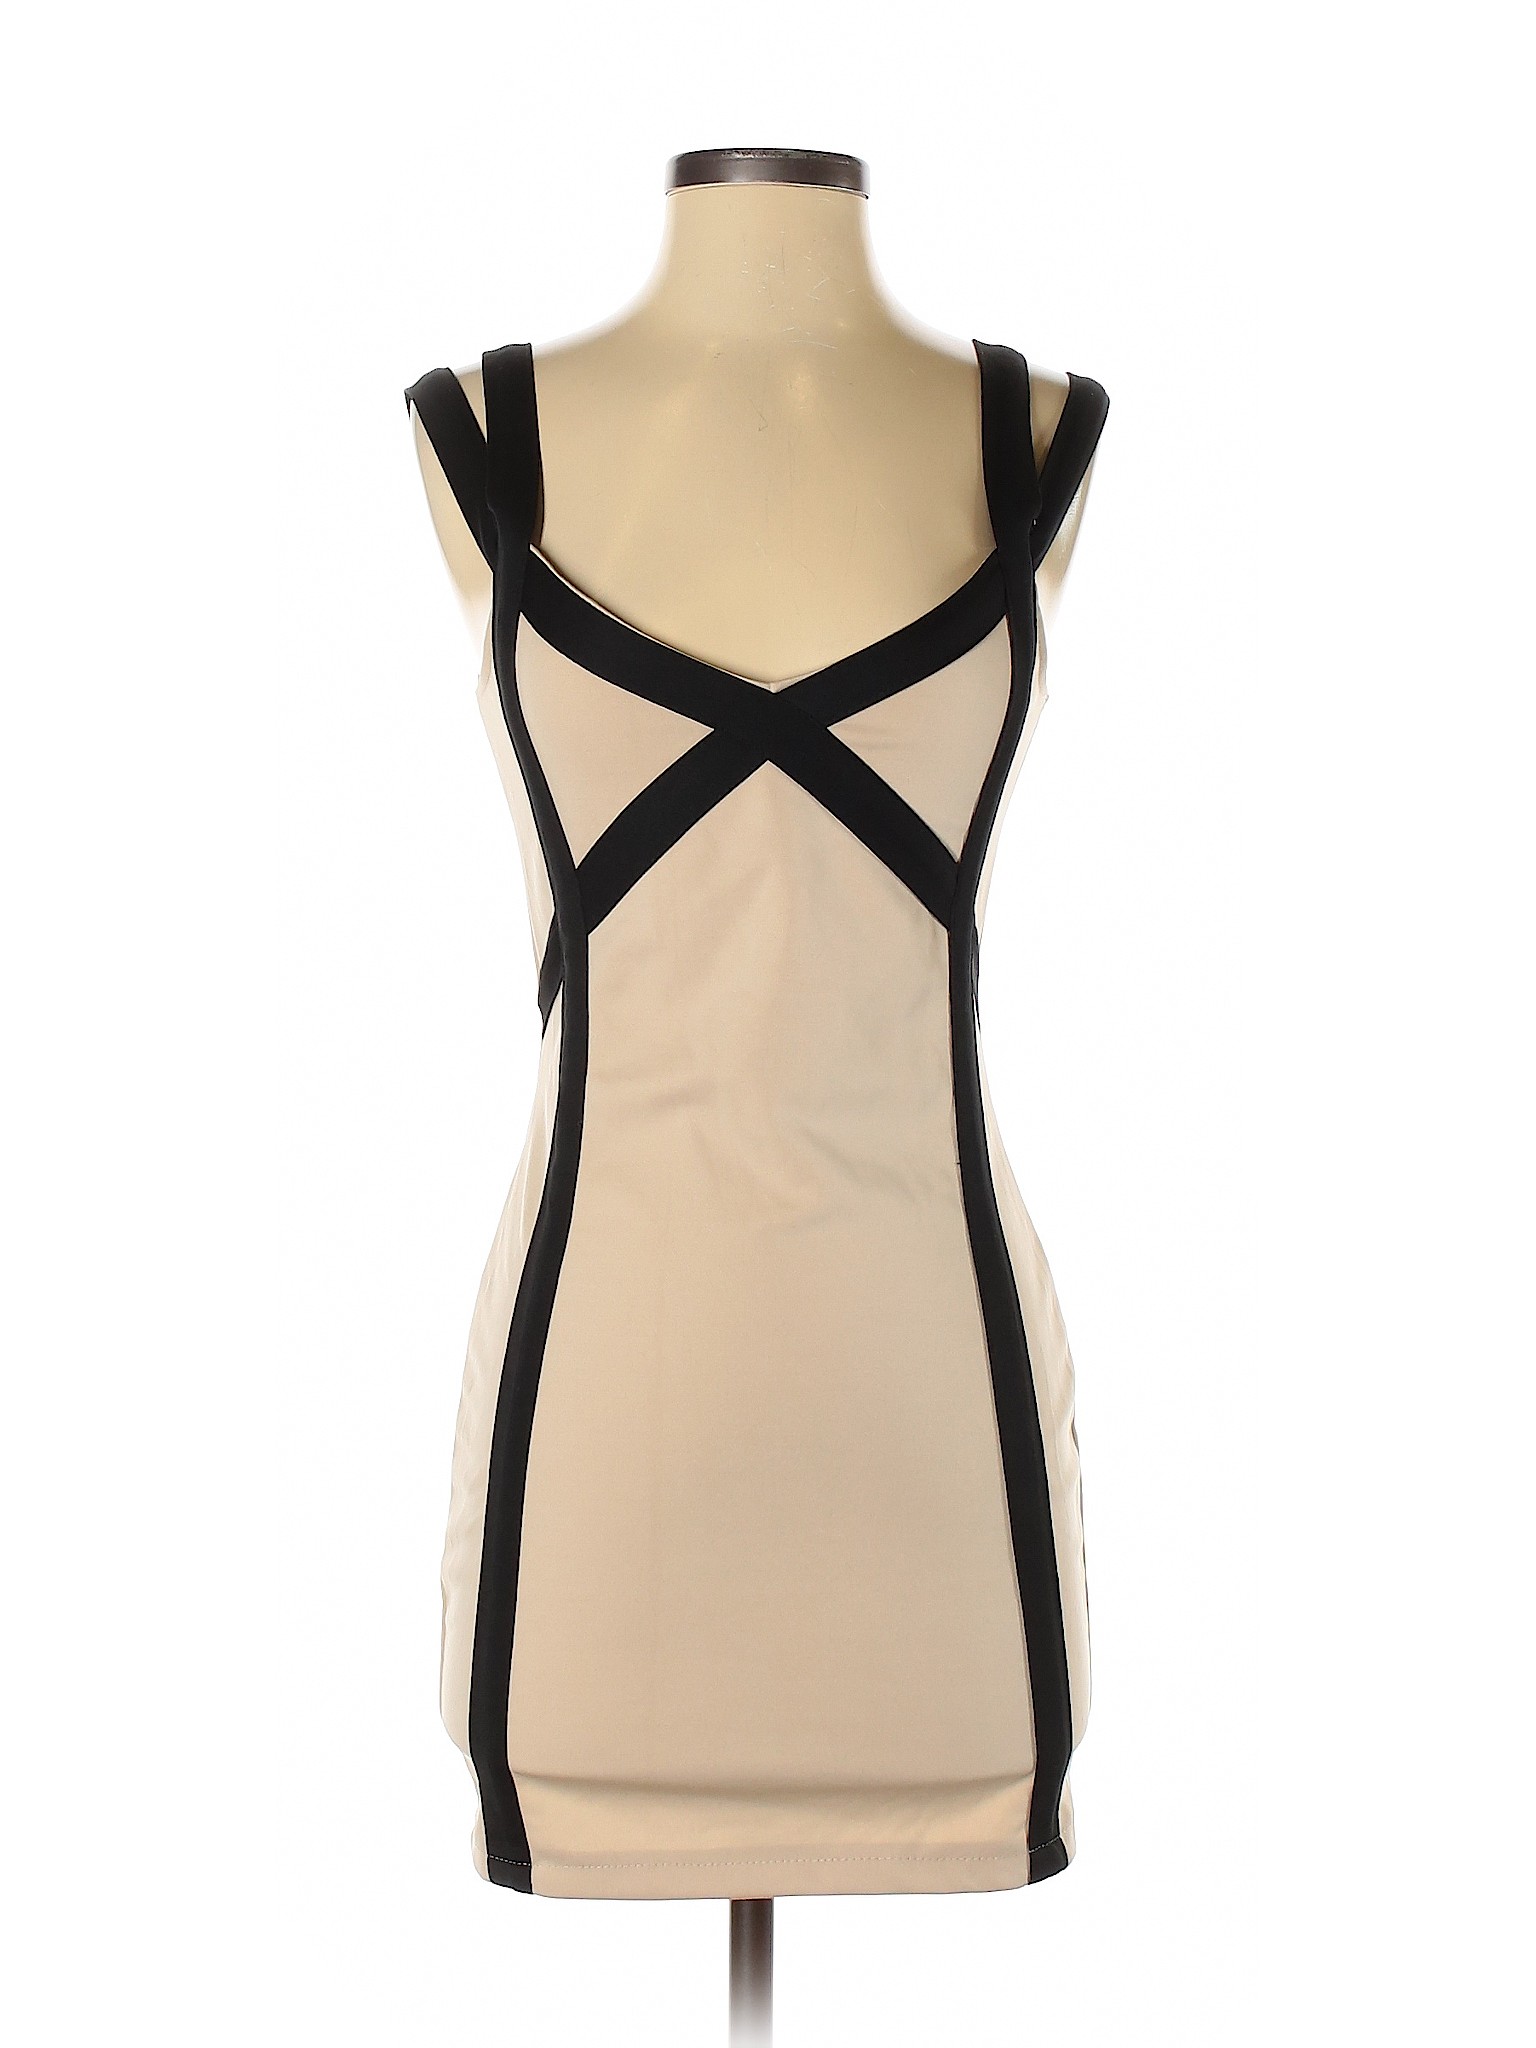 Unbranded Women Brown Cocktail Dress S | eBay